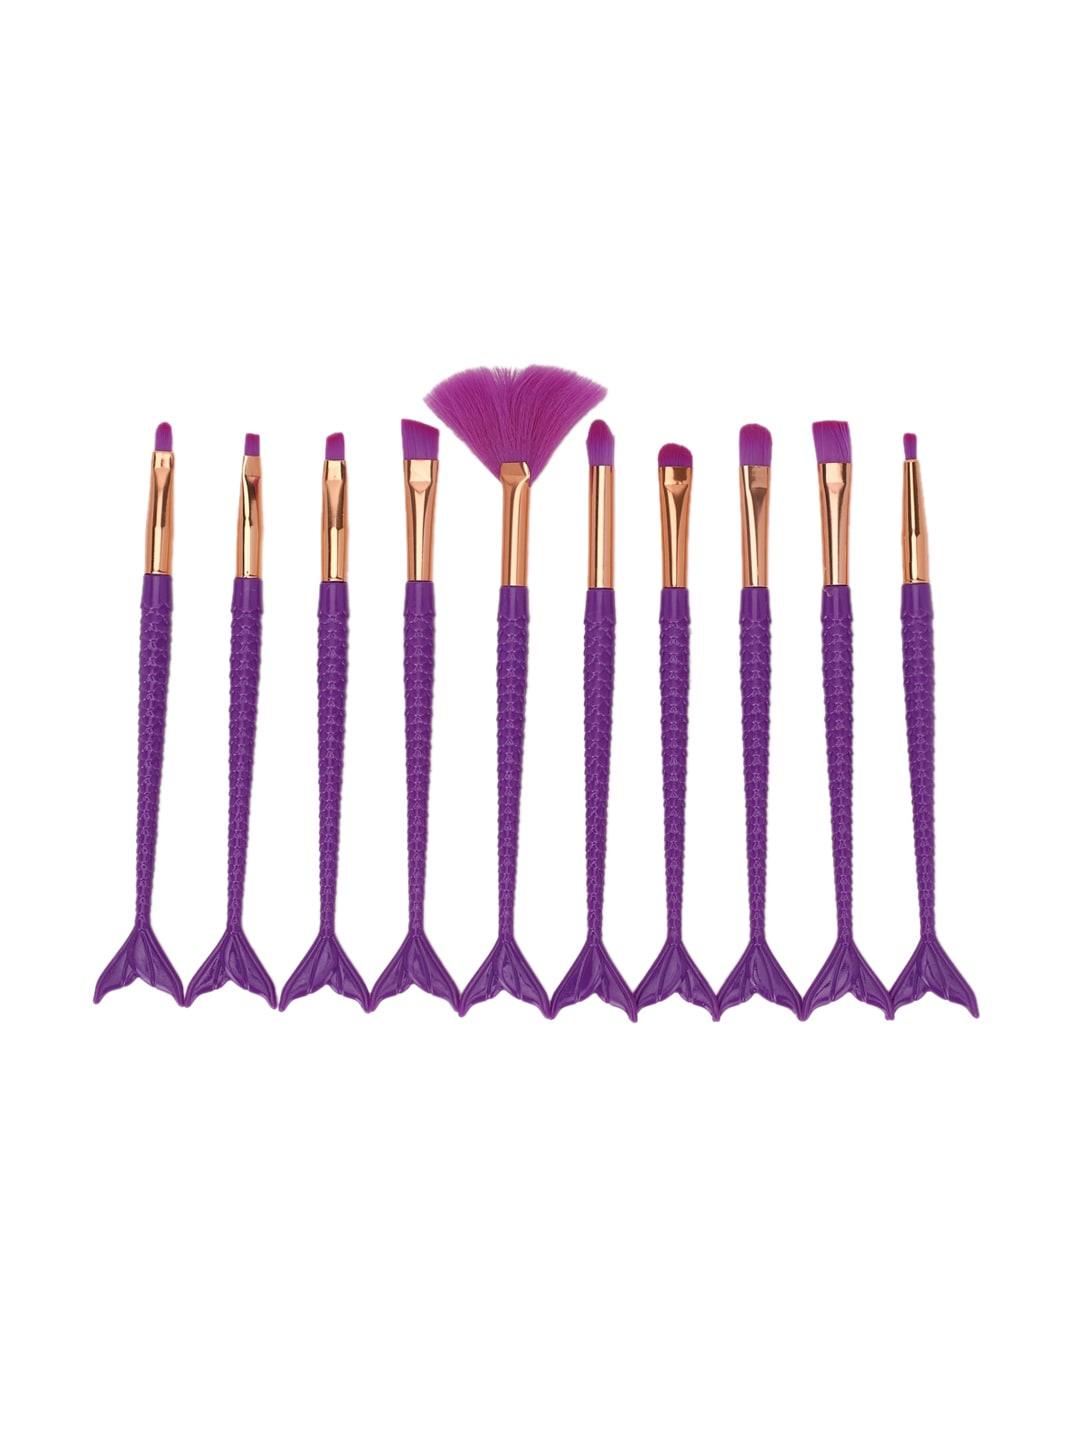 forever 21 purple set of 10 make brushes set